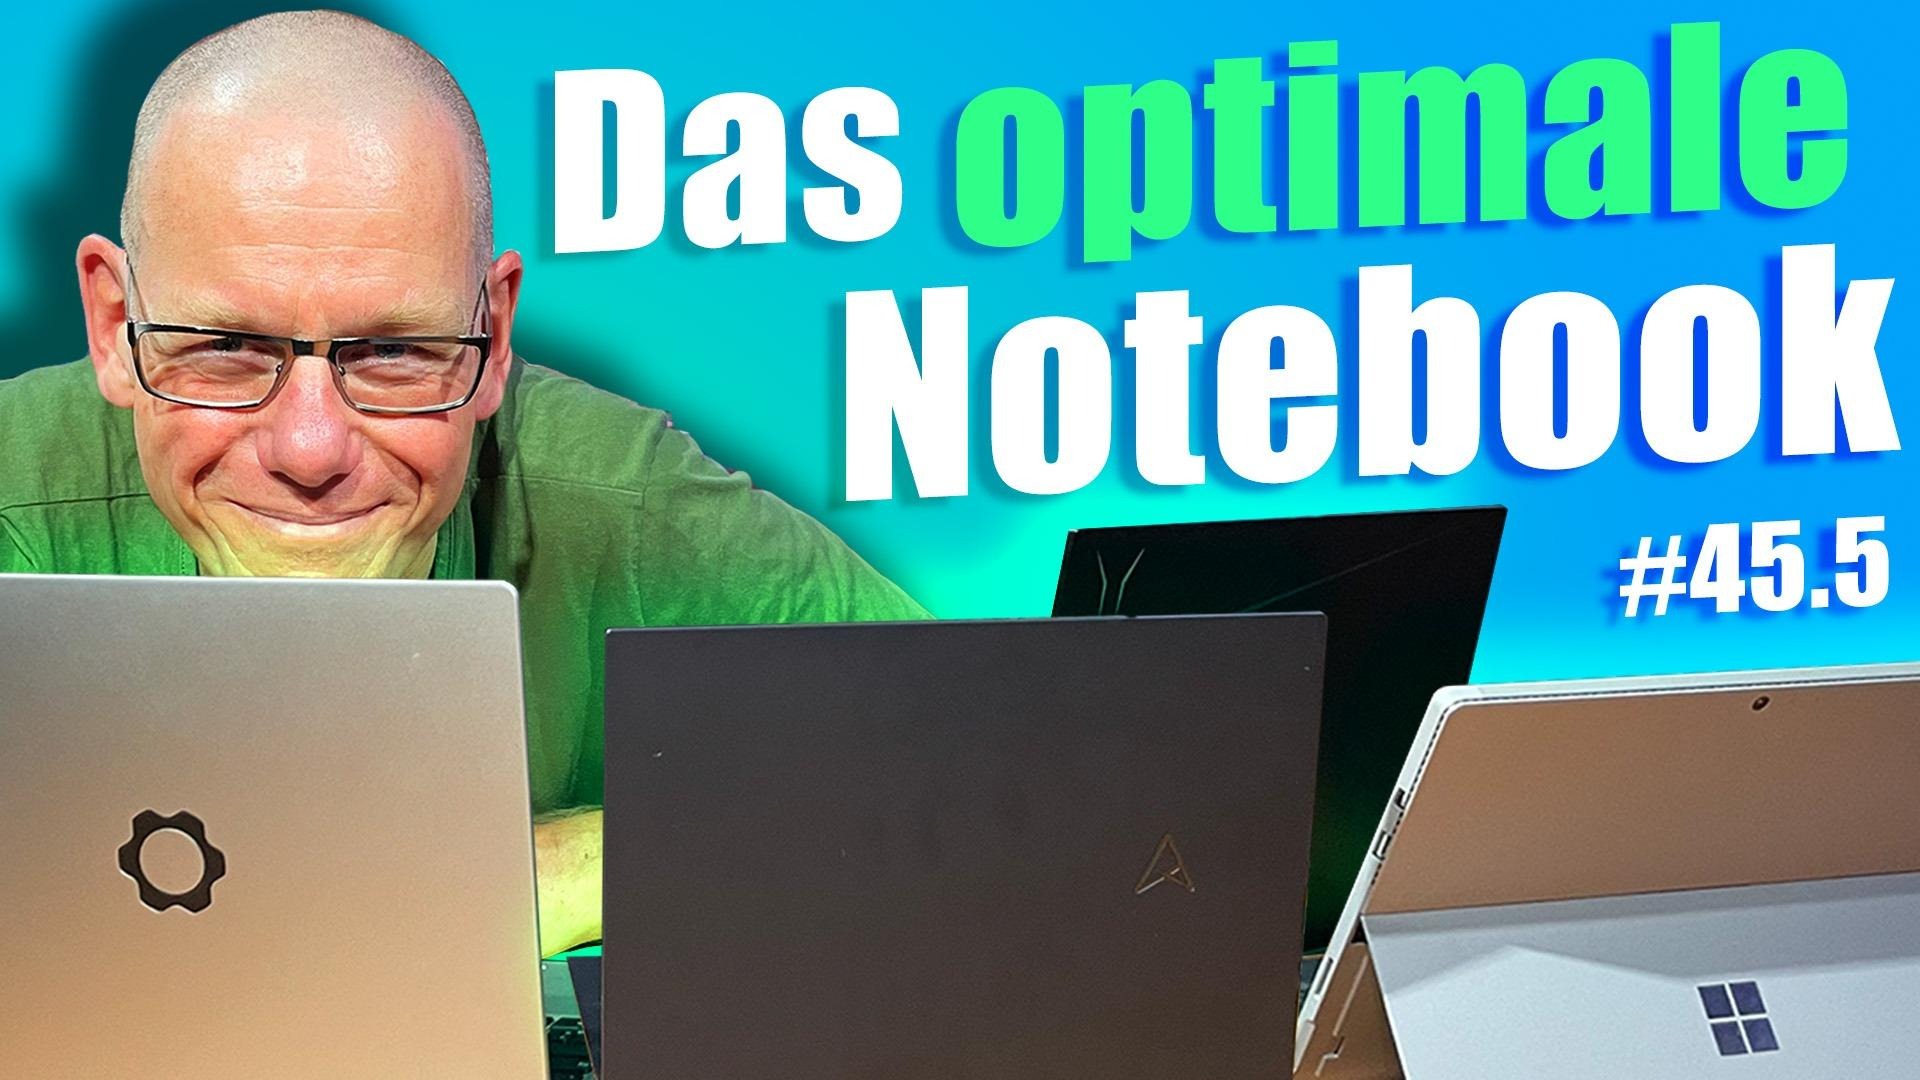 Die c't-Notebook-Kaufberatung | c't uplink 45.5 | heise online